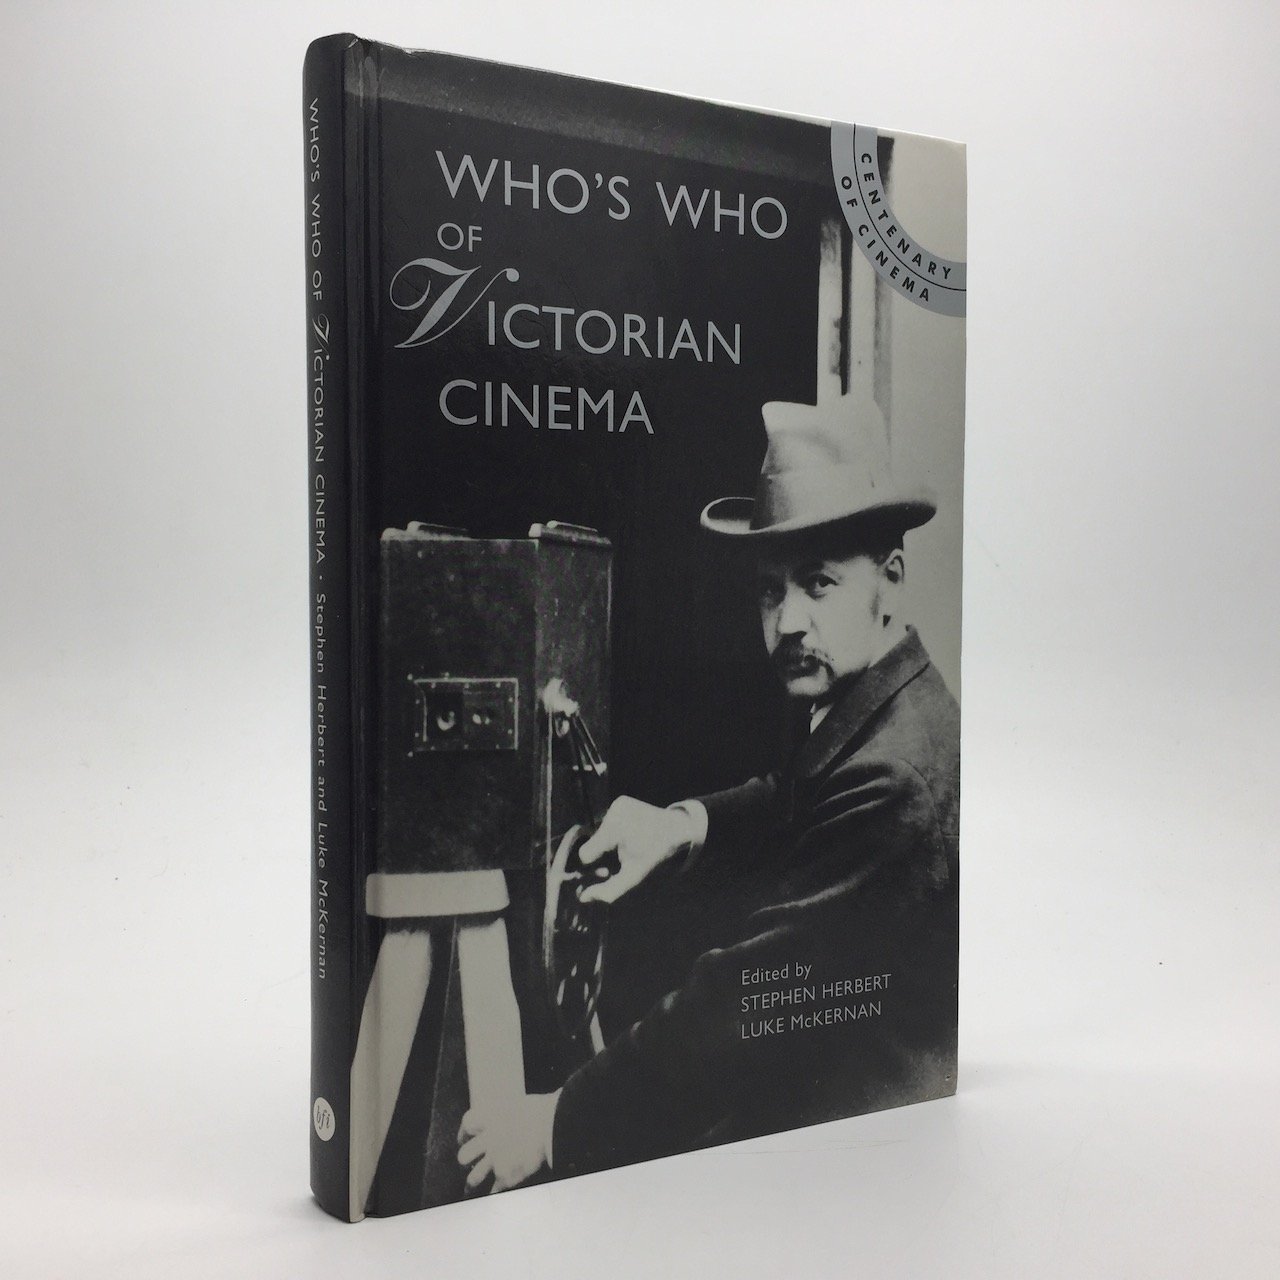 WHO'S WHO OF VICTORIAN CINEMA: A WORLDWIDE SURVEY (SIGNED AND INSCRIBED BY S. HERBERT) - HERBERT, Stephen, Luke Mckernan (Eds.)